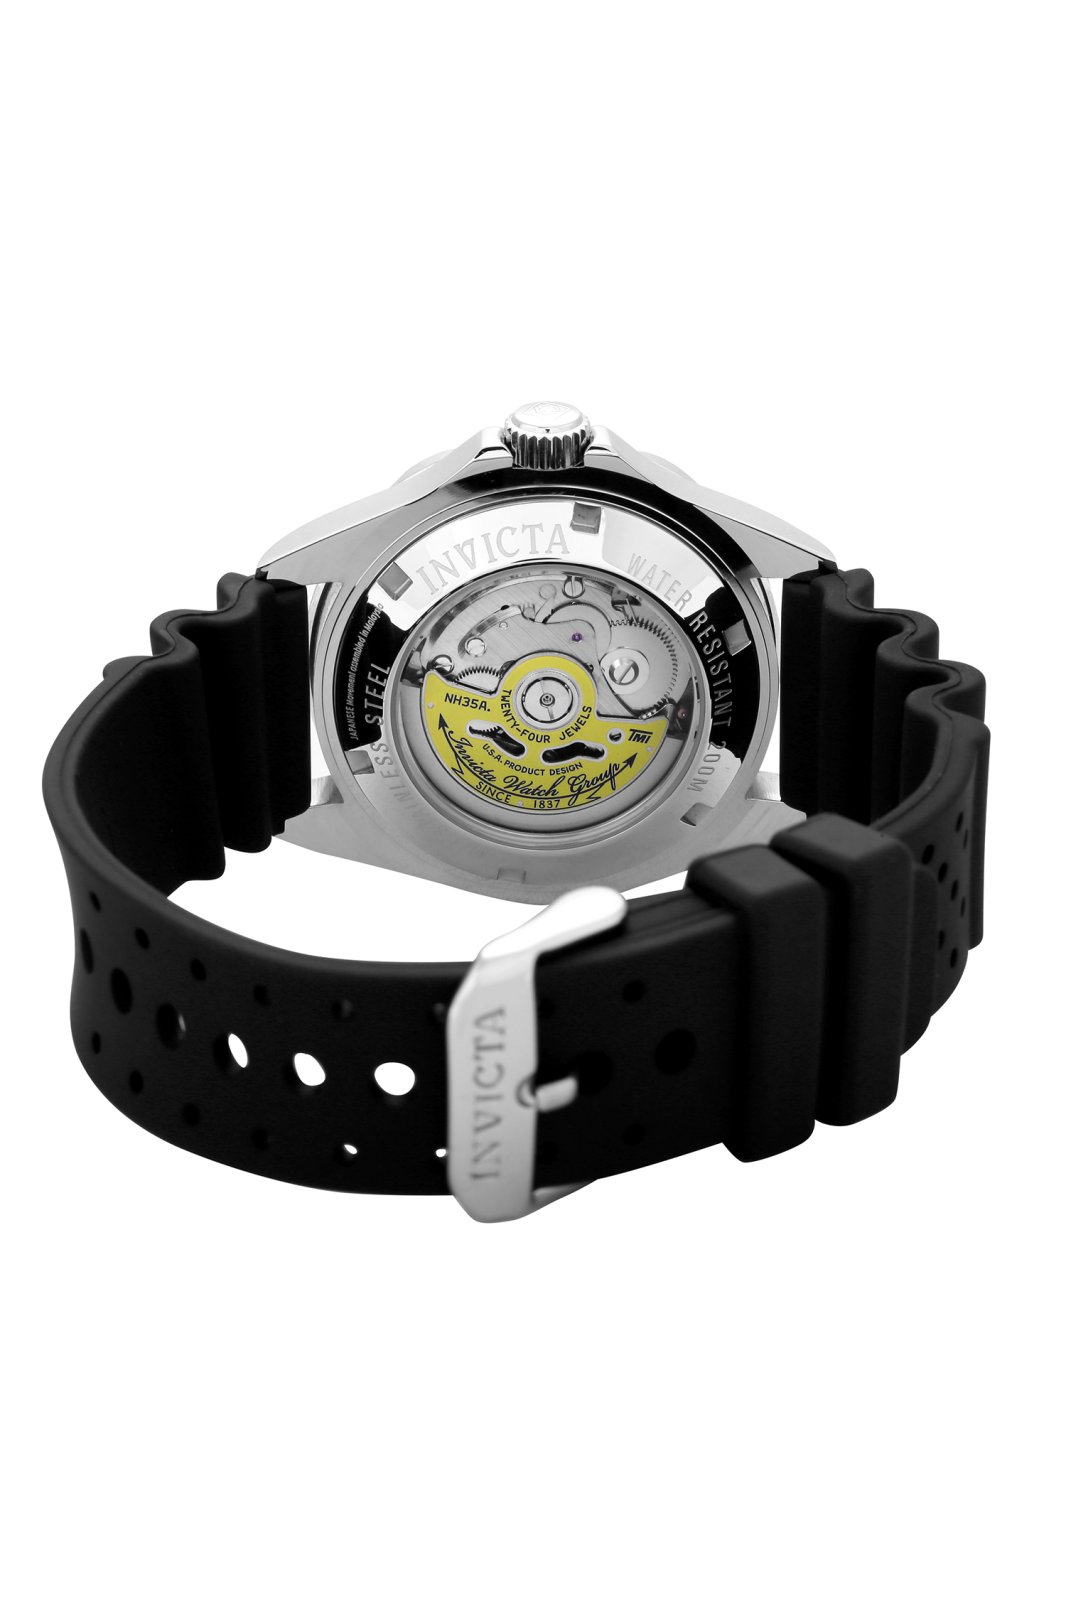 Invicta Watch Pro Diver 9110 - Official Invicta Store - Buy Online!